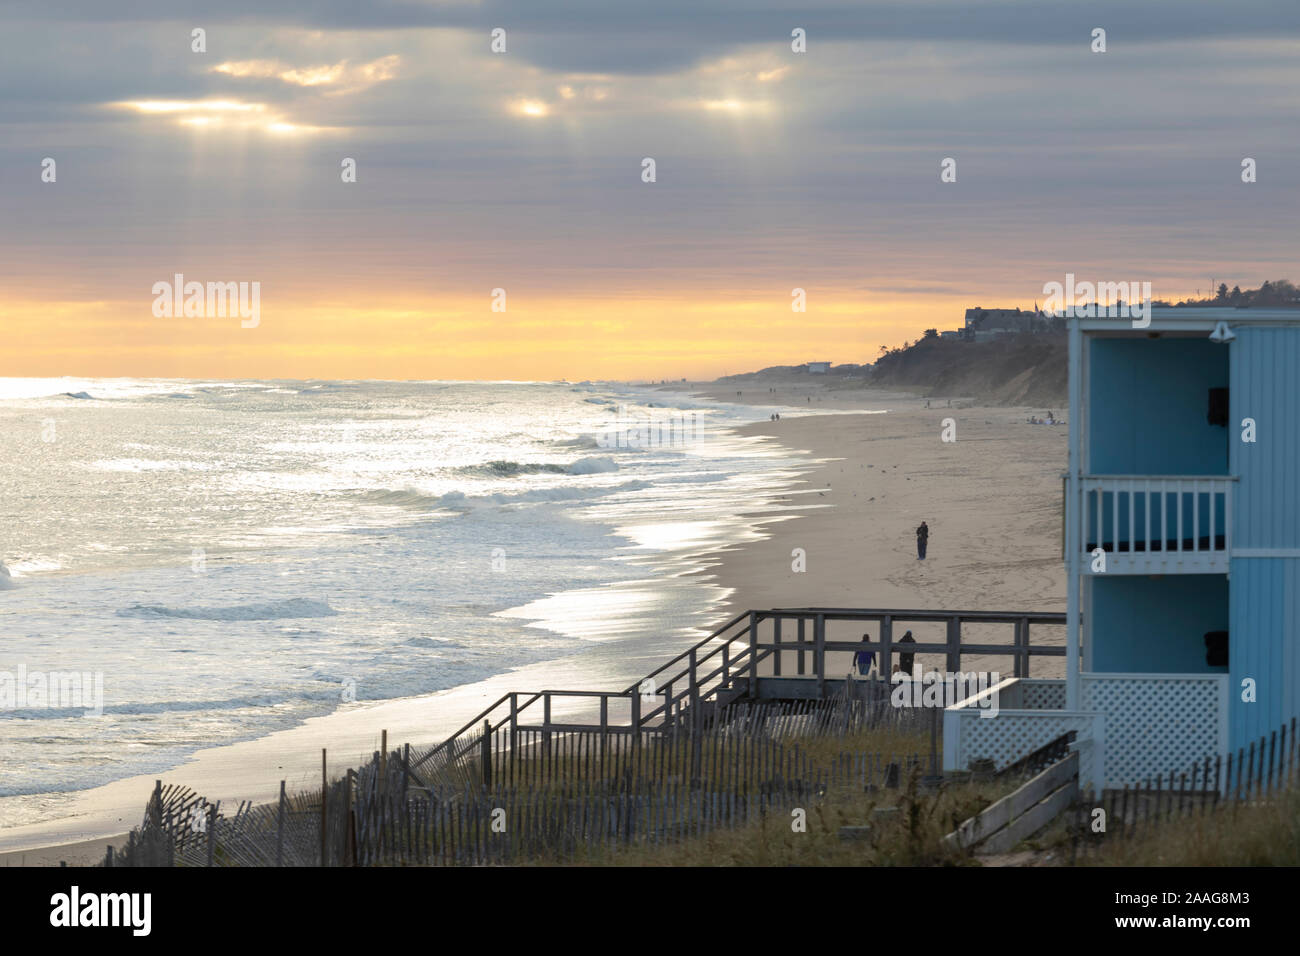 Atlantic Ocean coastline at sunset in the off season Stock Photo